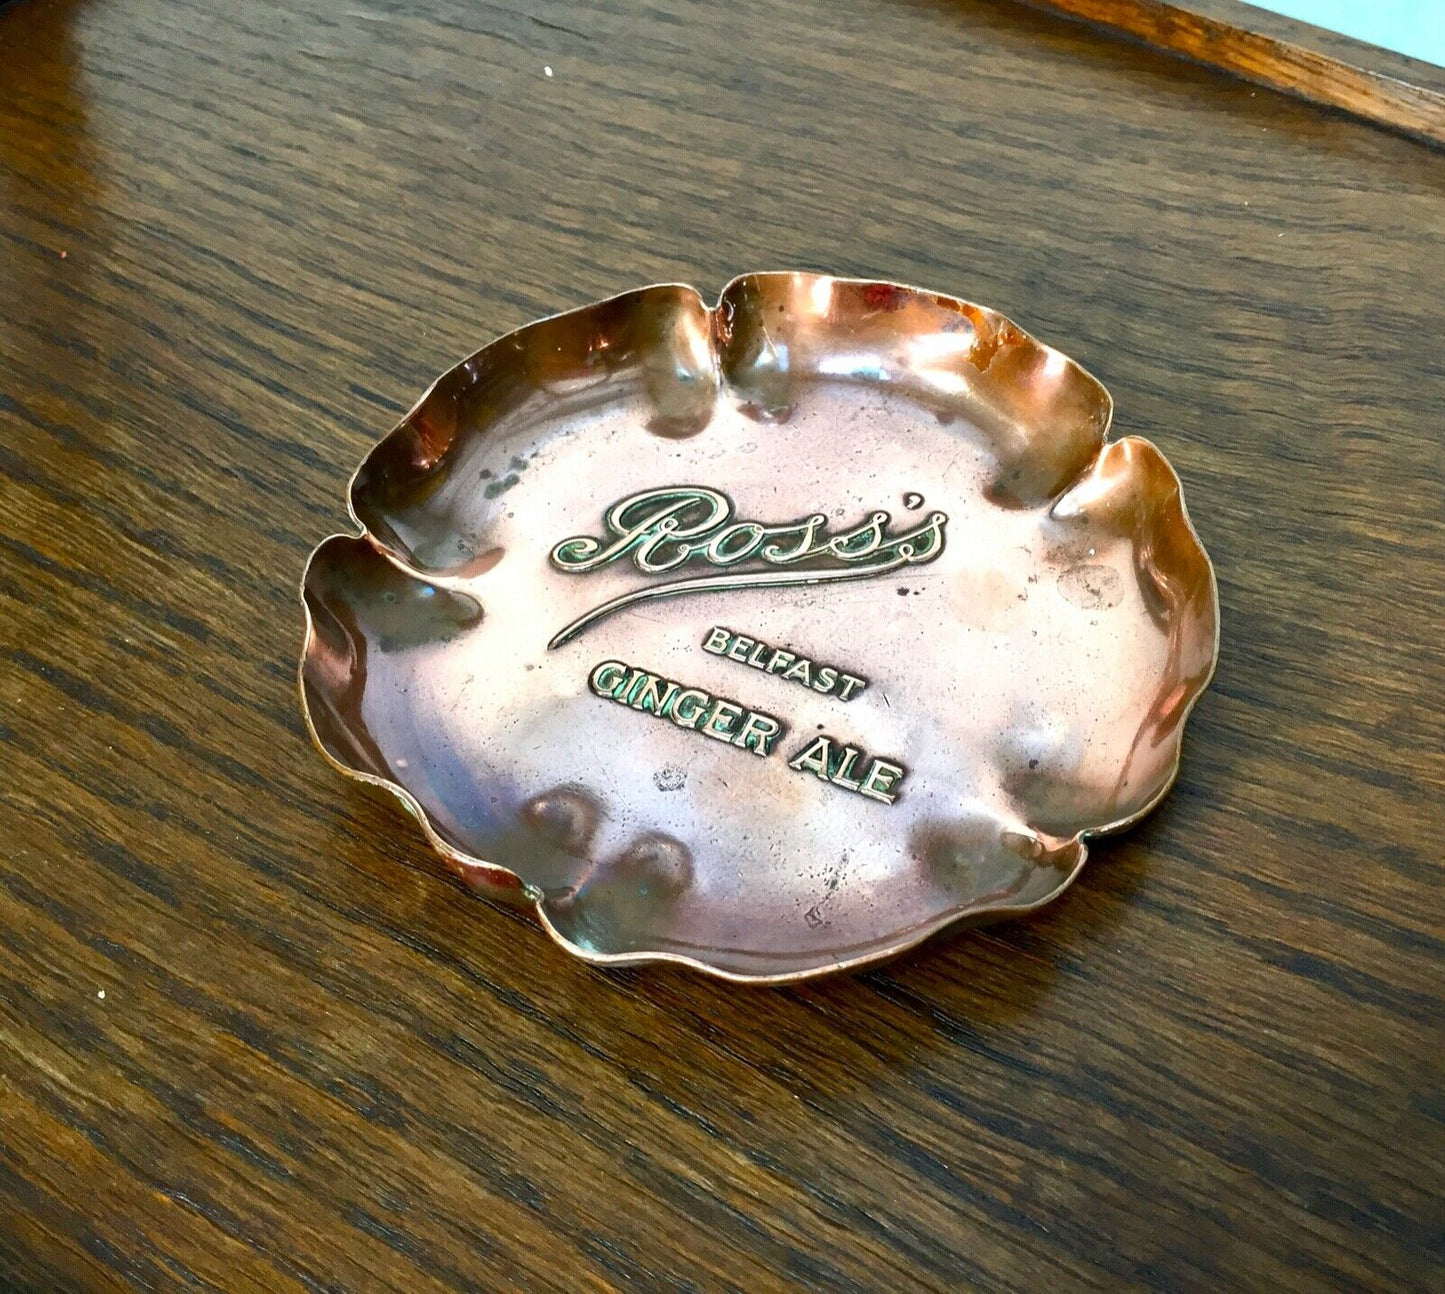 Antique Advertising - Copper Pub Ashtray / Dish for Ross's Belfast Ginger Beer